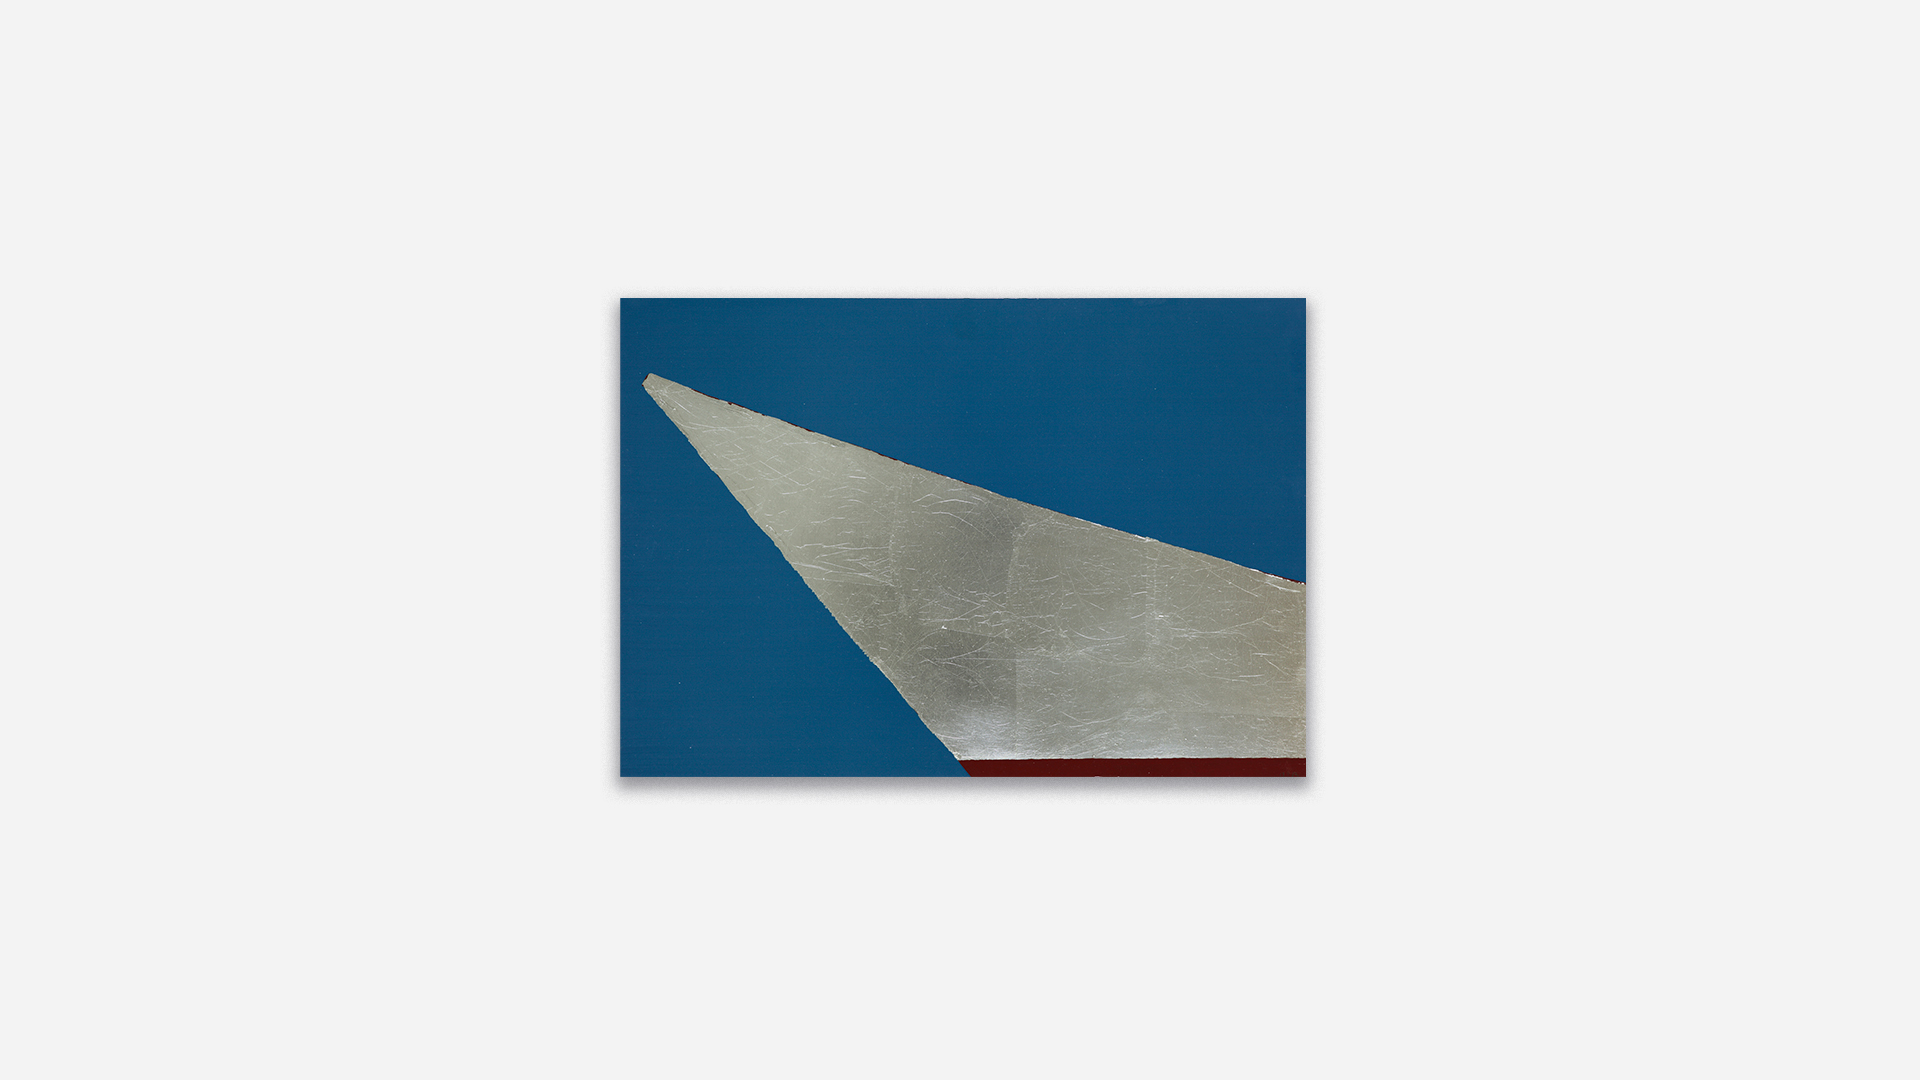 Anna-Eva Bergman, N°29-1977 Petite barque d'argent, Acrylic and metal leaf on wood panel, 46 x 65 cm